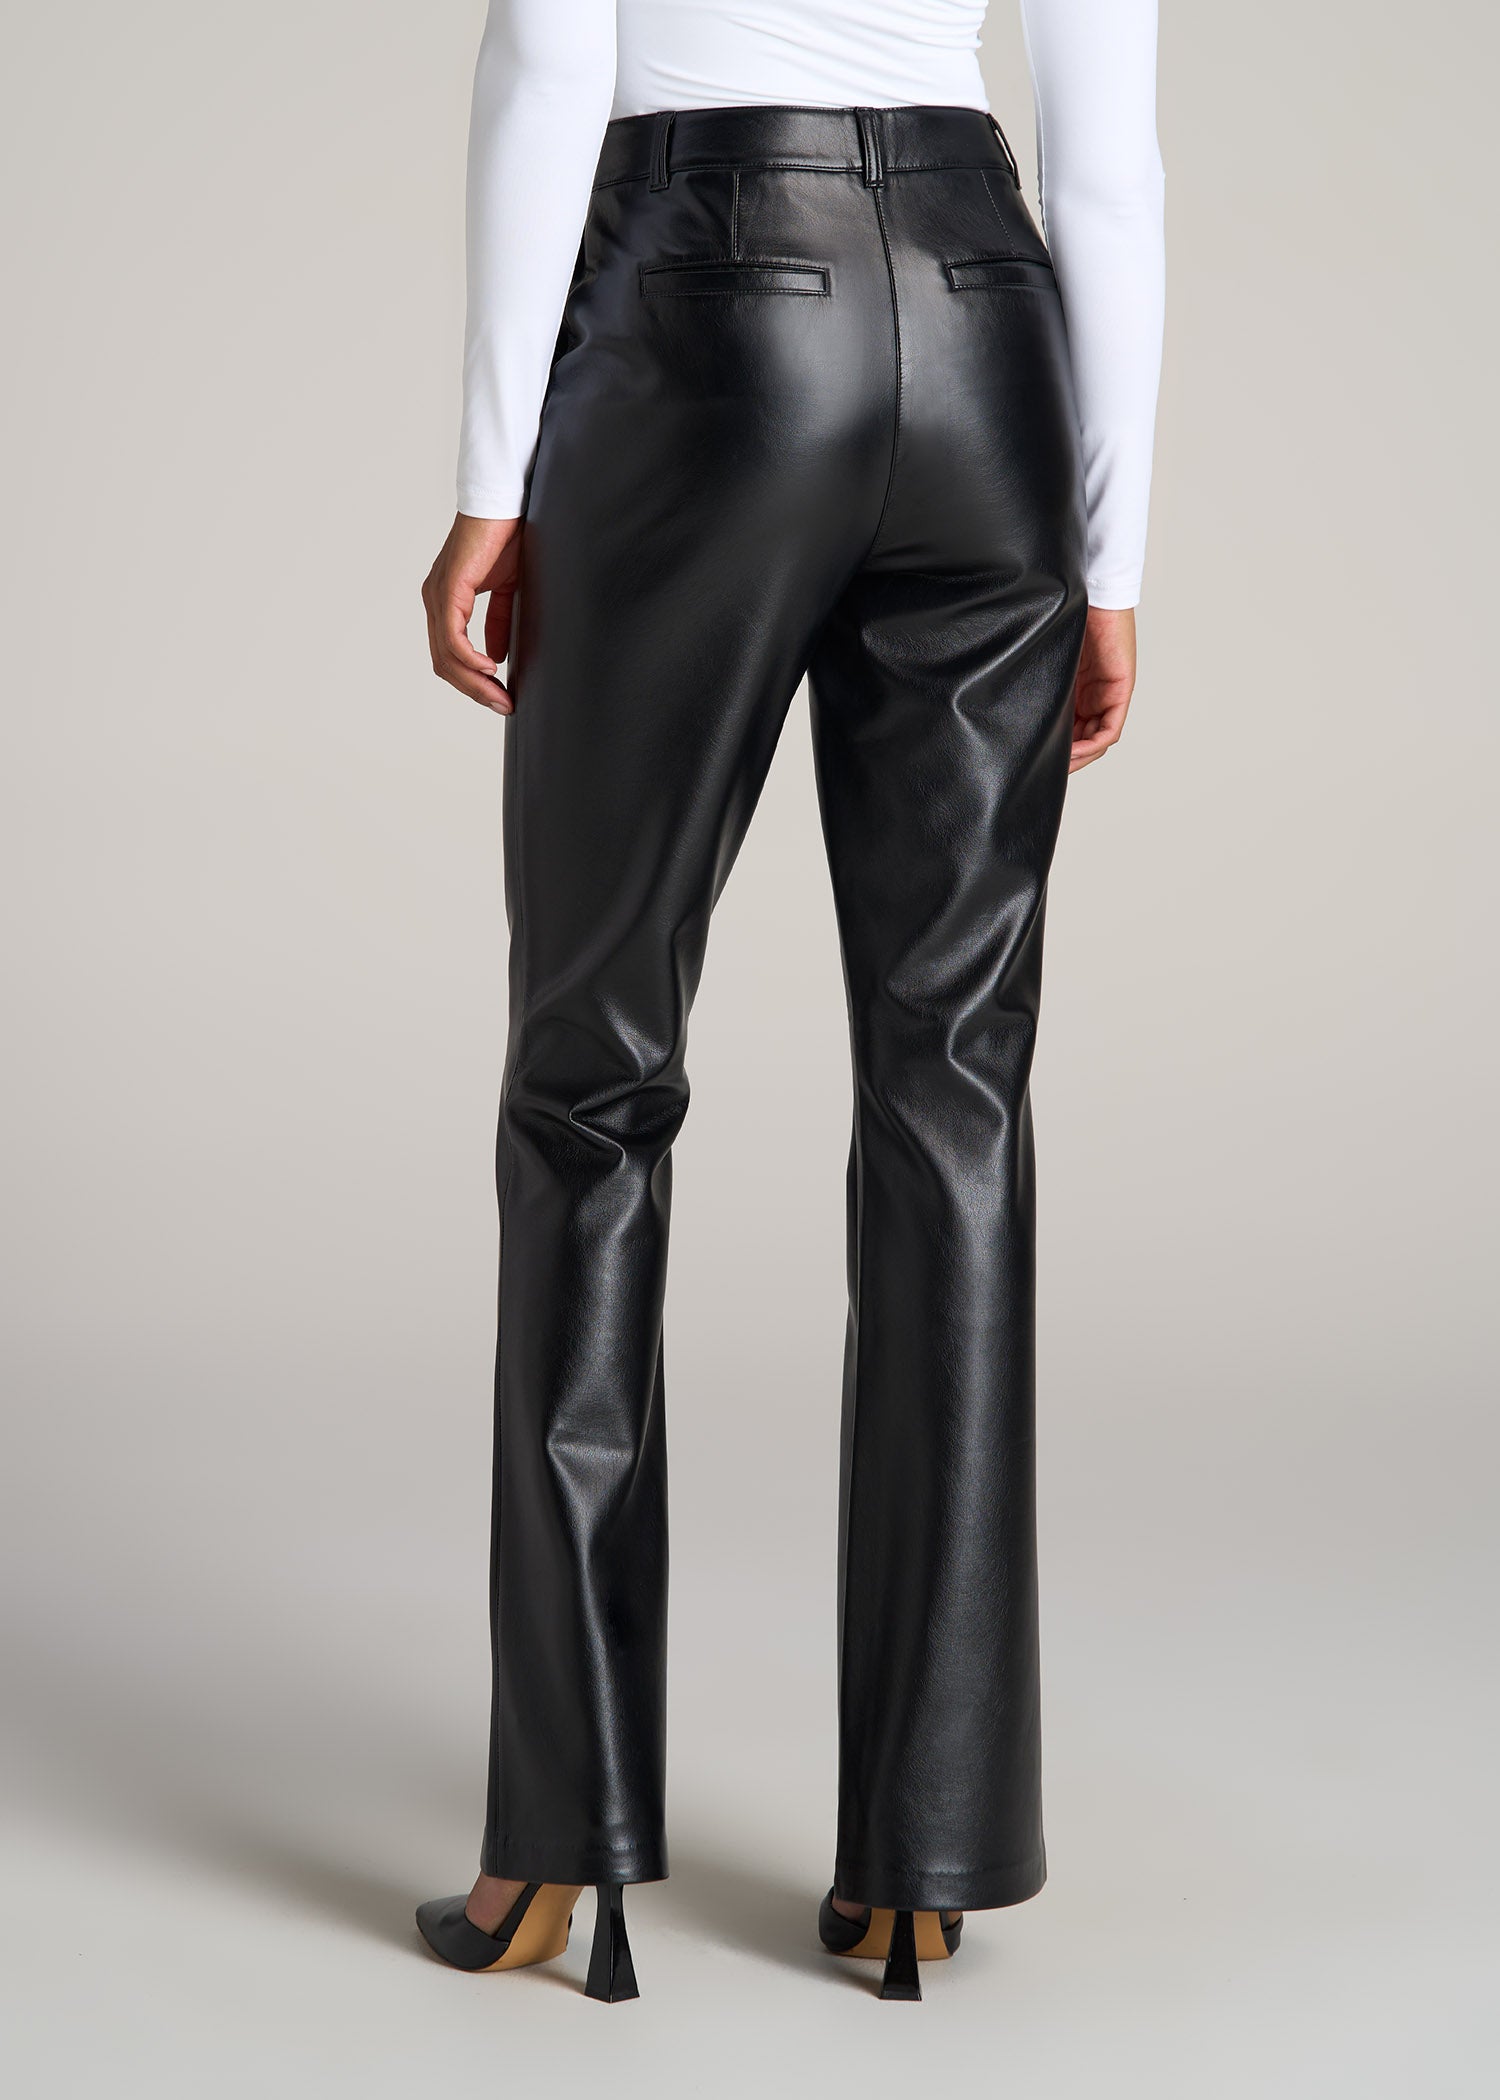  Black Leather Pants